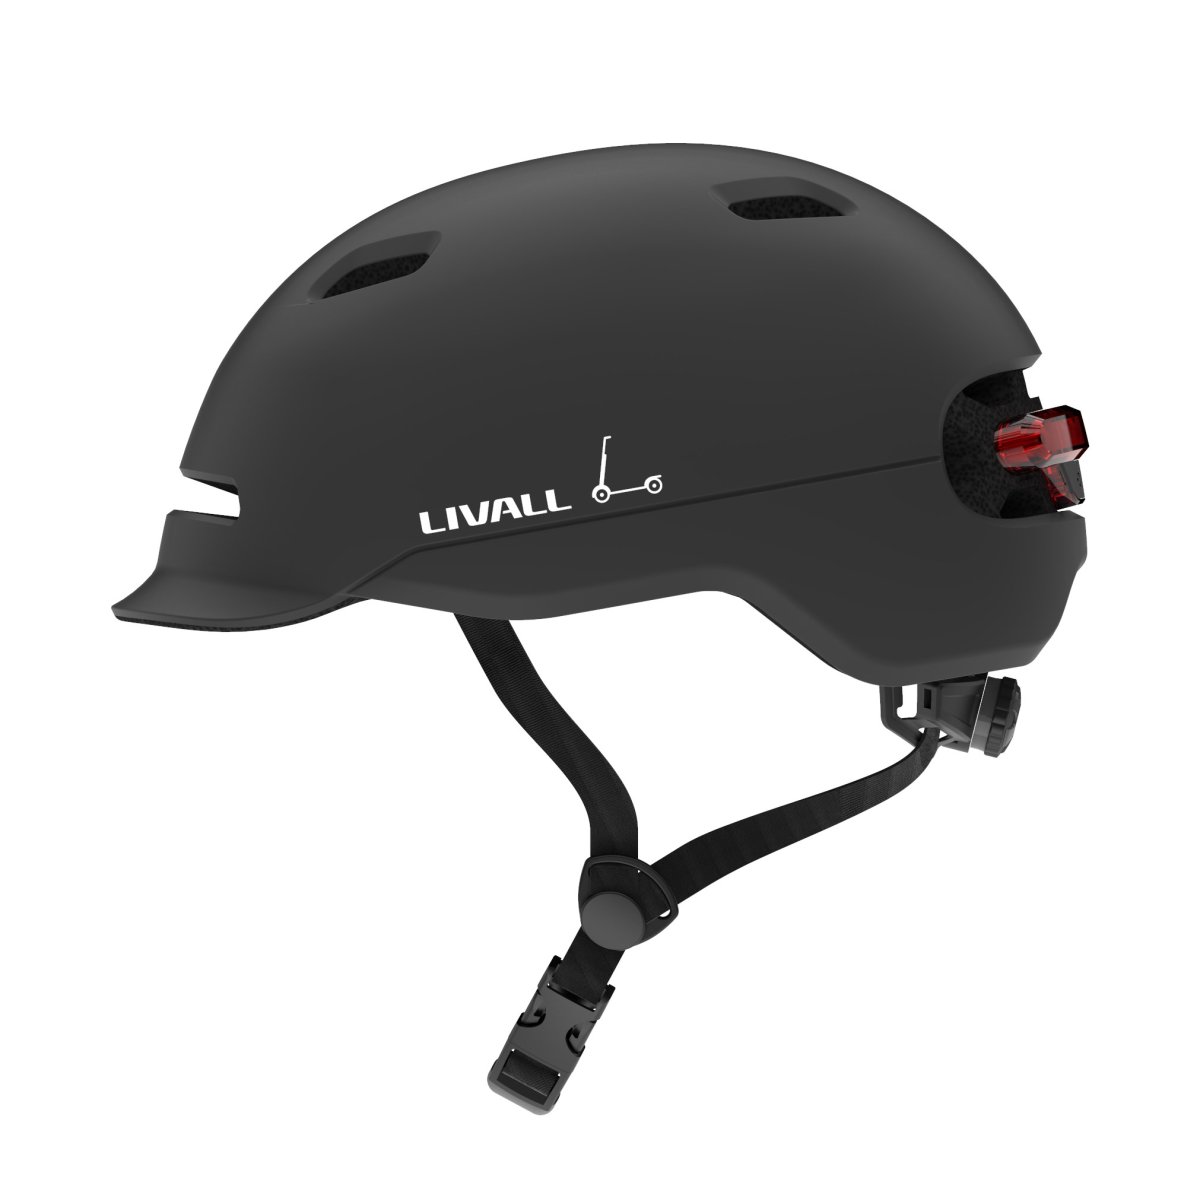 Livall C20 | bike helmet accessory